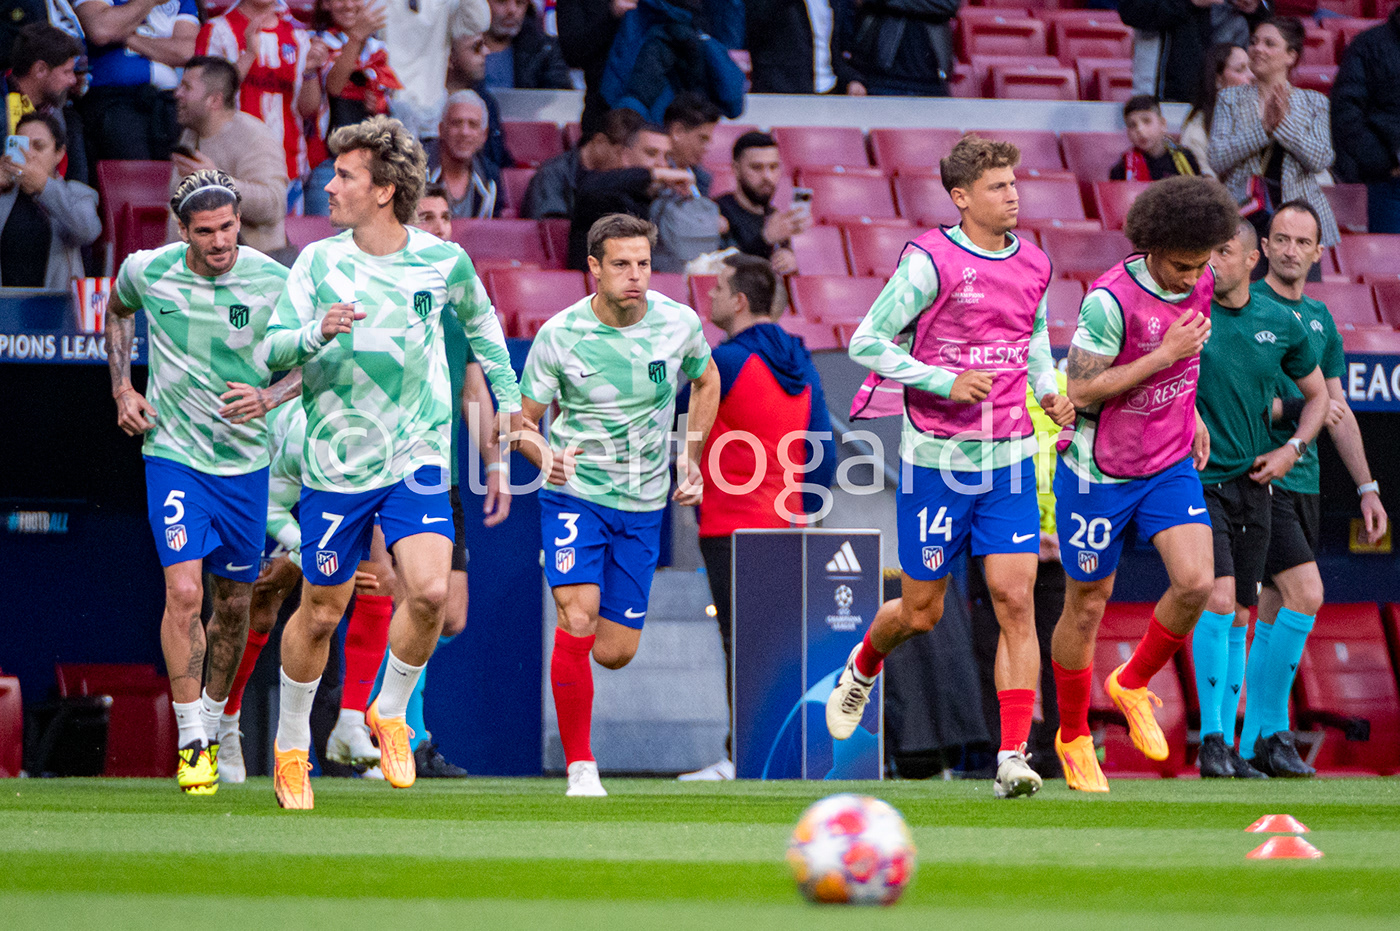 Atletico Madrid champions league football Sport Photography photographer Photography  Fotografia germany Futbol soccer